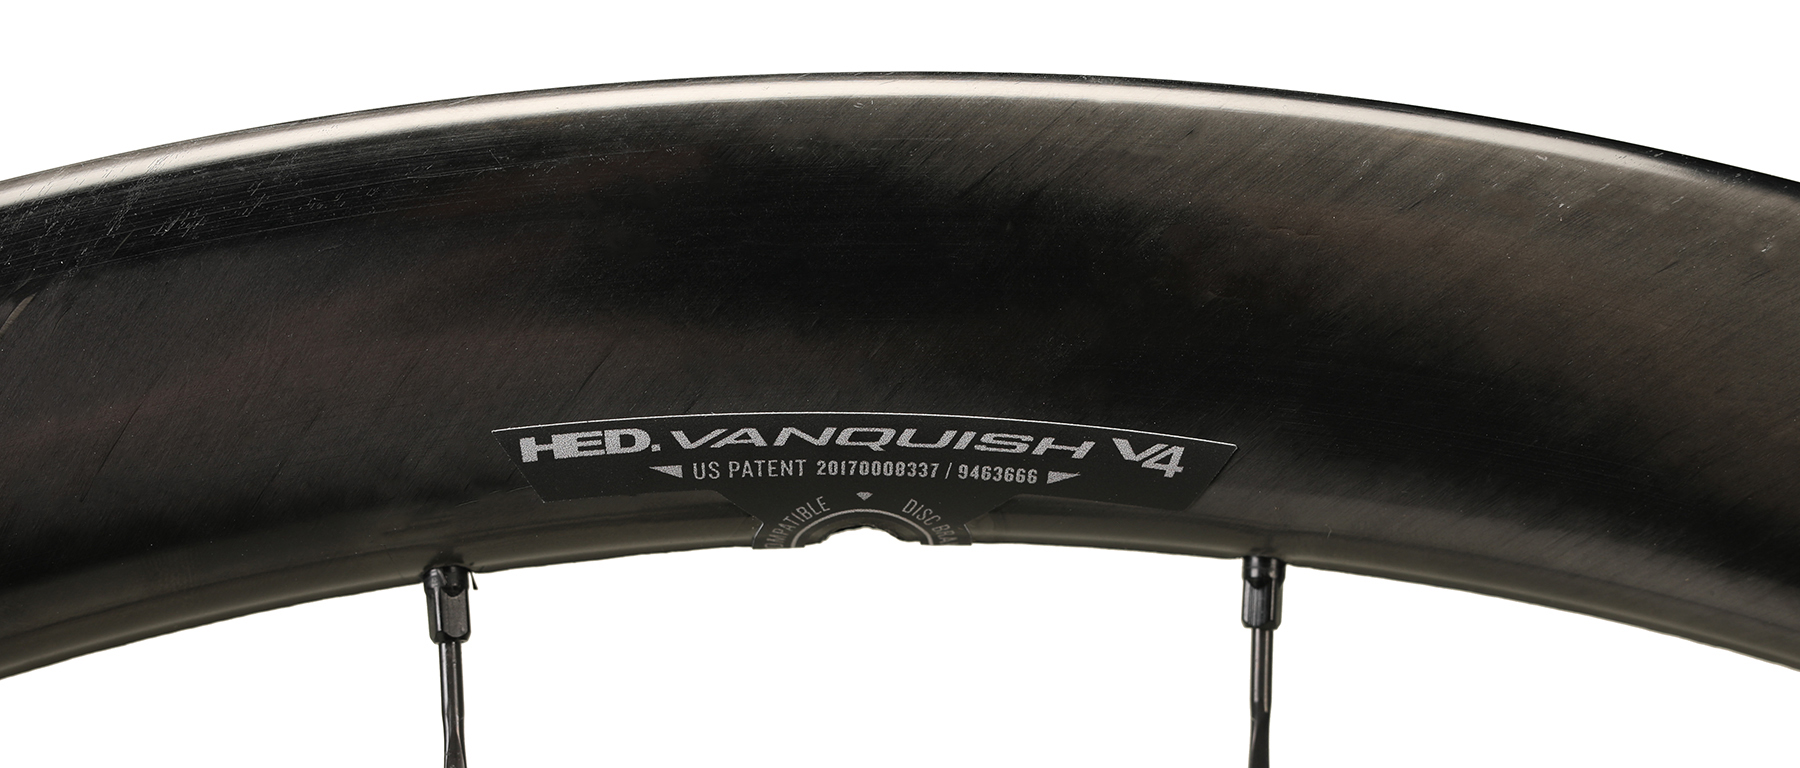 HED Vanquish 4 Carbon Disc Wheelset